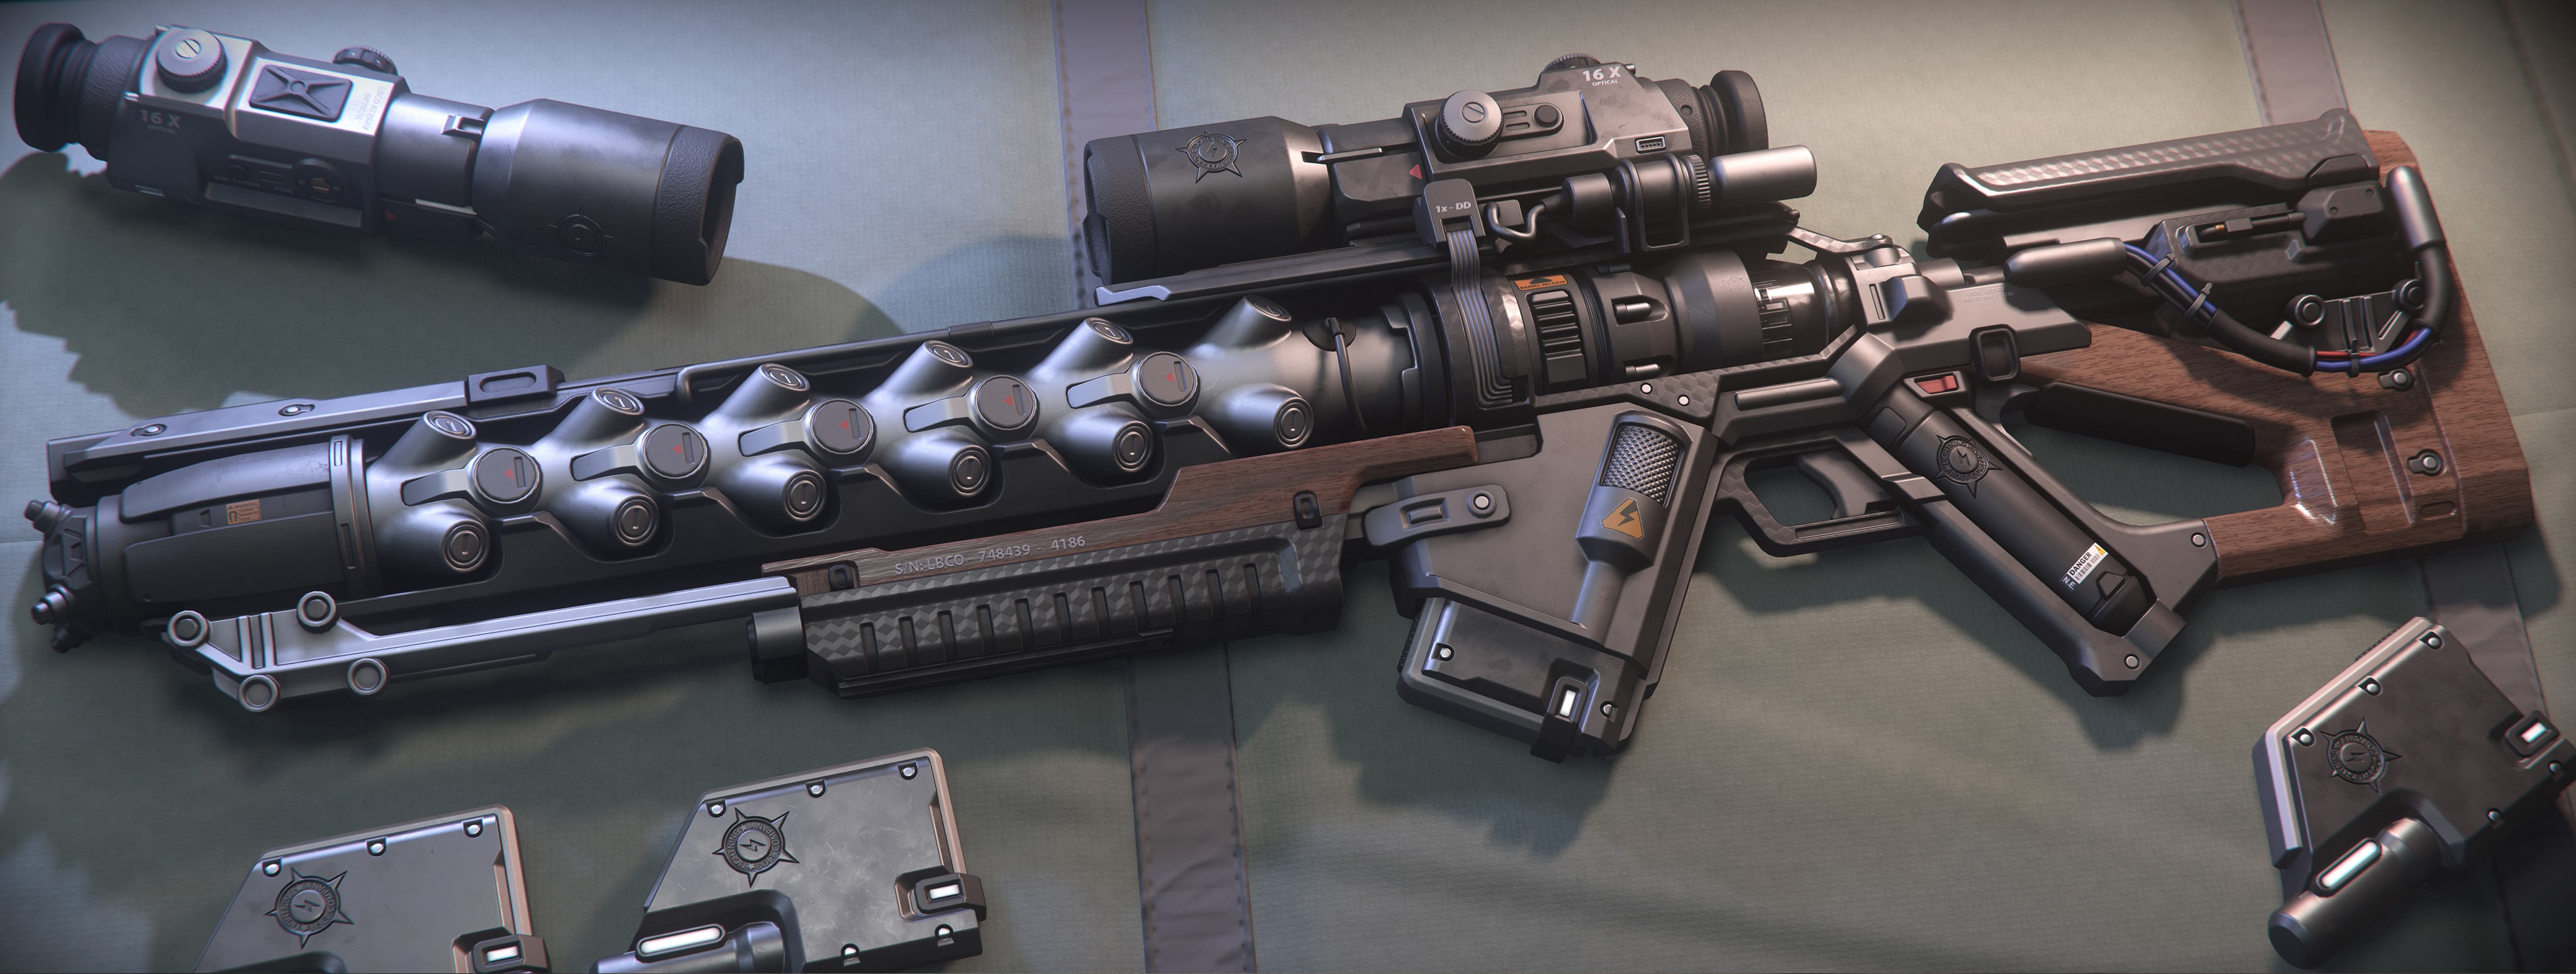 Automatic Sniper Rifle - Fortnite Wiki